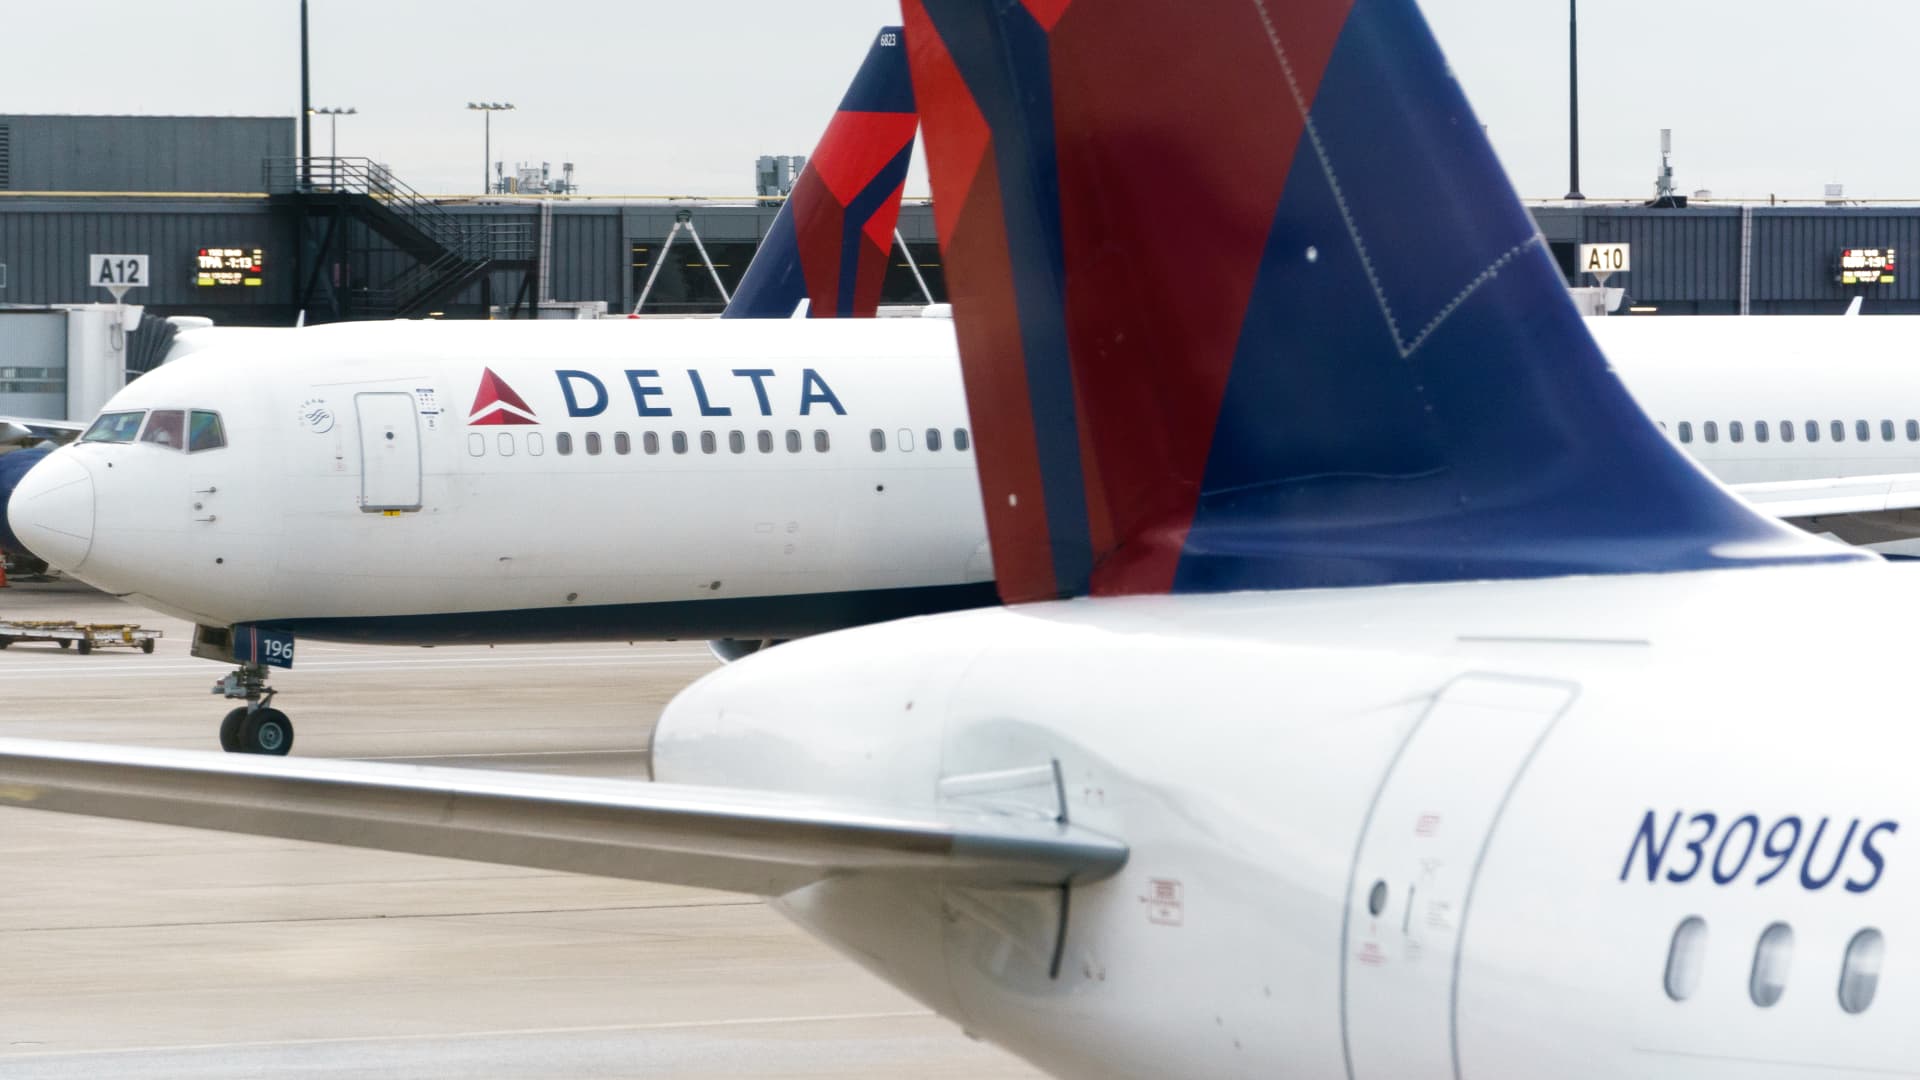 Delta Air Lines airplanes at the Hartsfield-Jackson Atlanta International Airport (ATL) in Atlanta, Georgia, U.S., on Tuesday, Dec. 21, 2021.